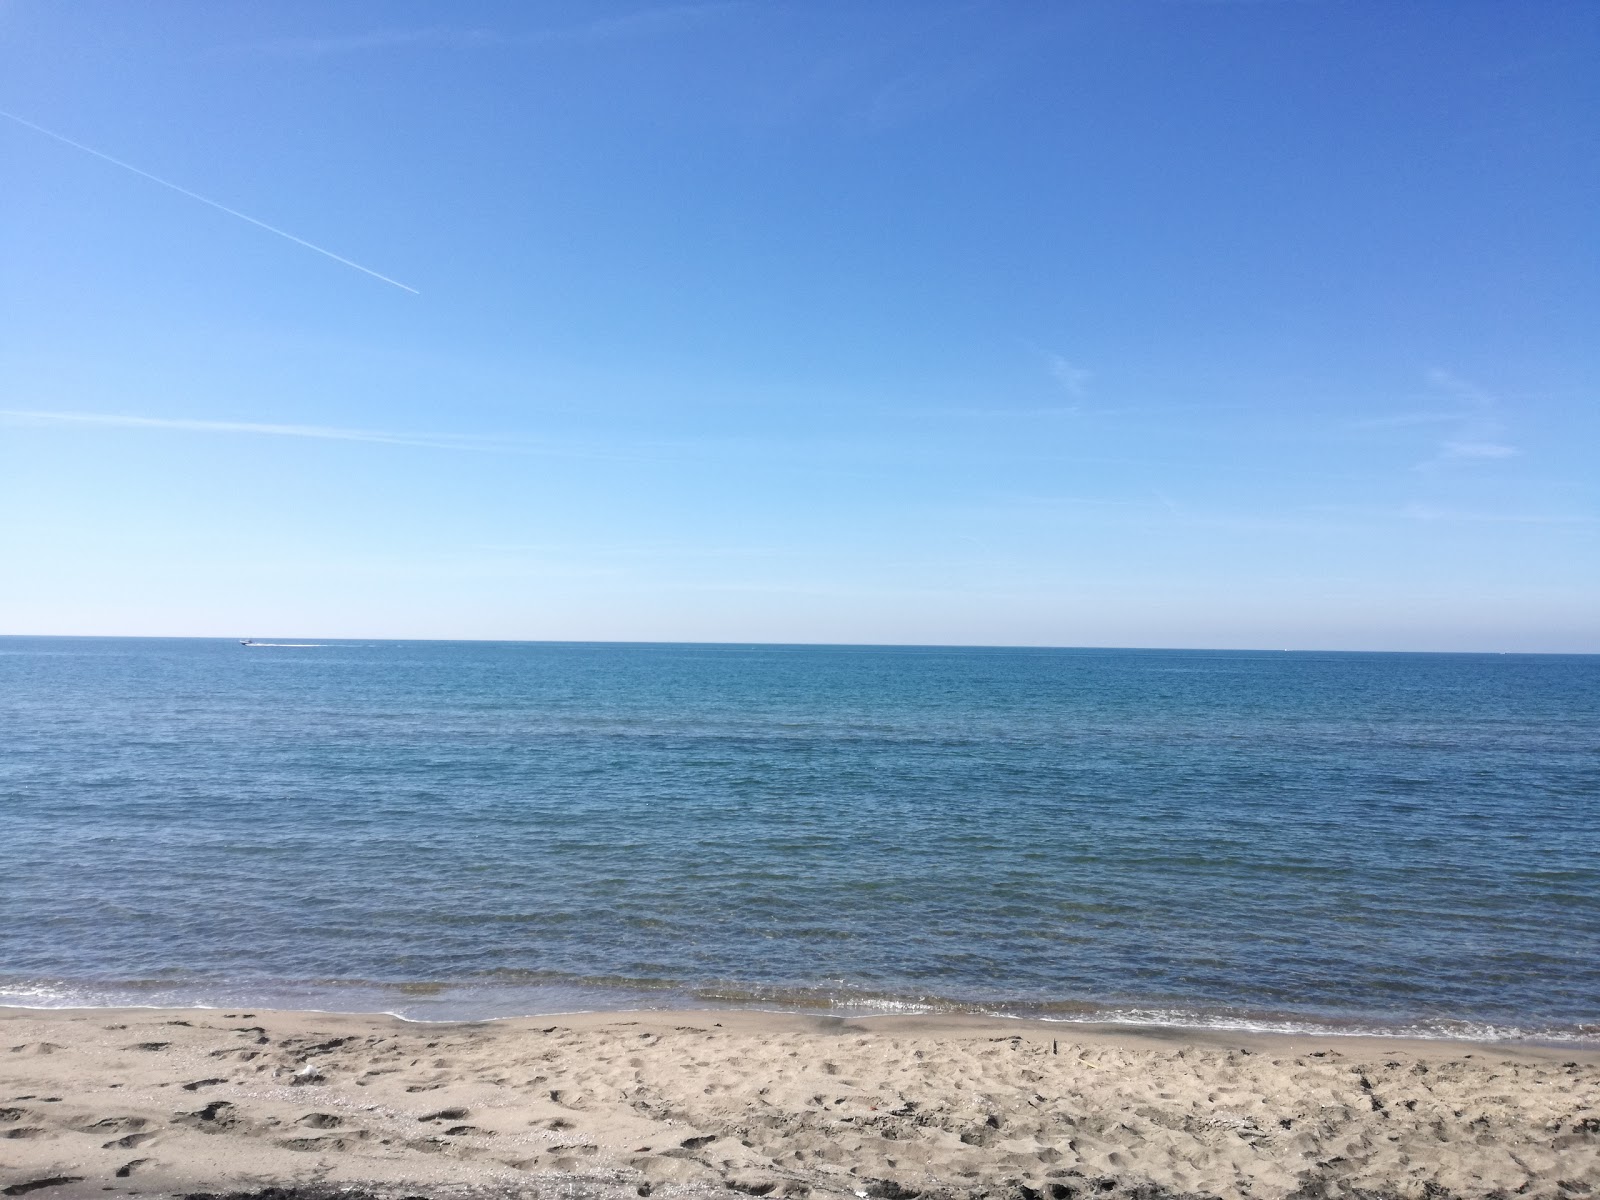 Photo of Bagnara di CastelVolturno beach resort area